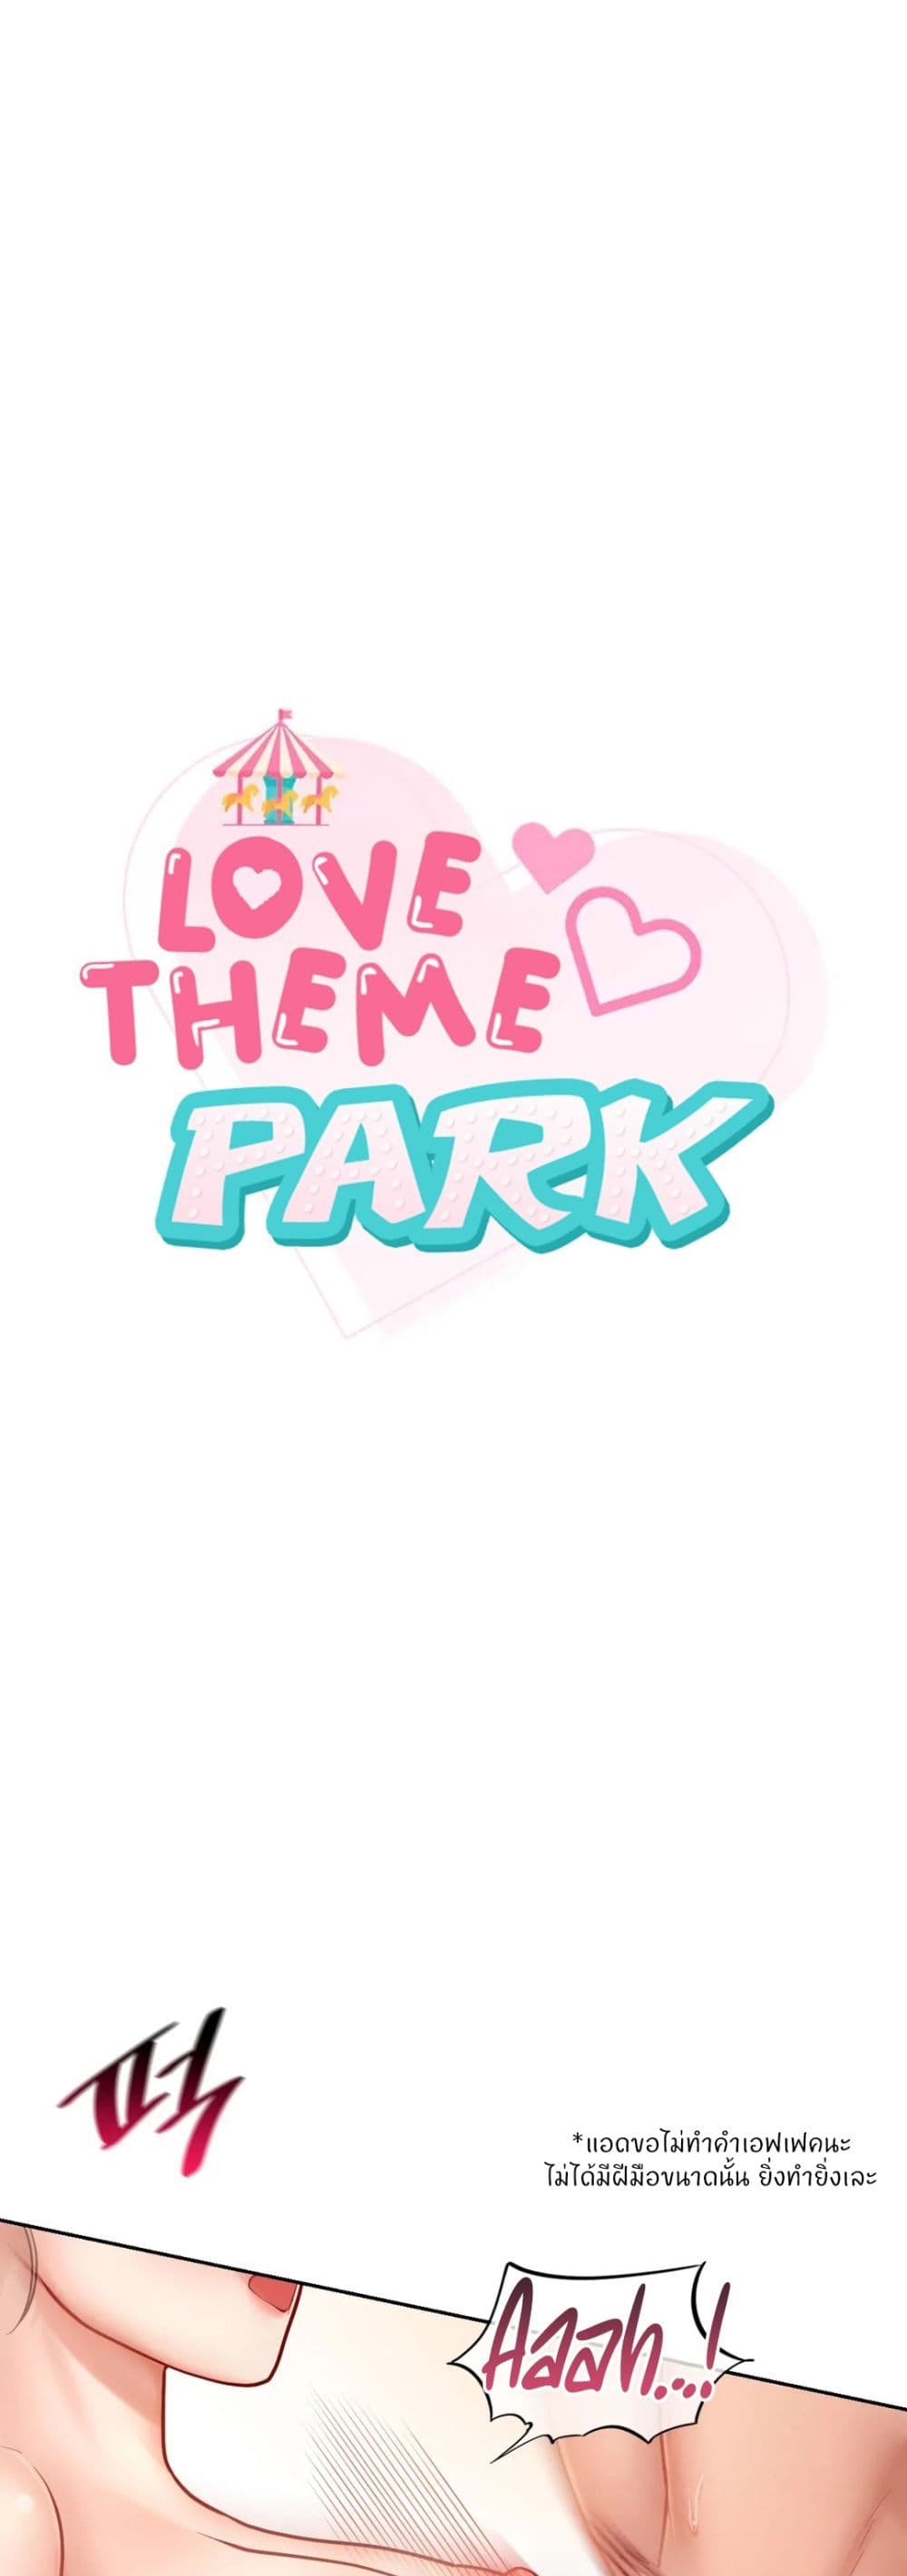 Love Theme Park 34 (1)